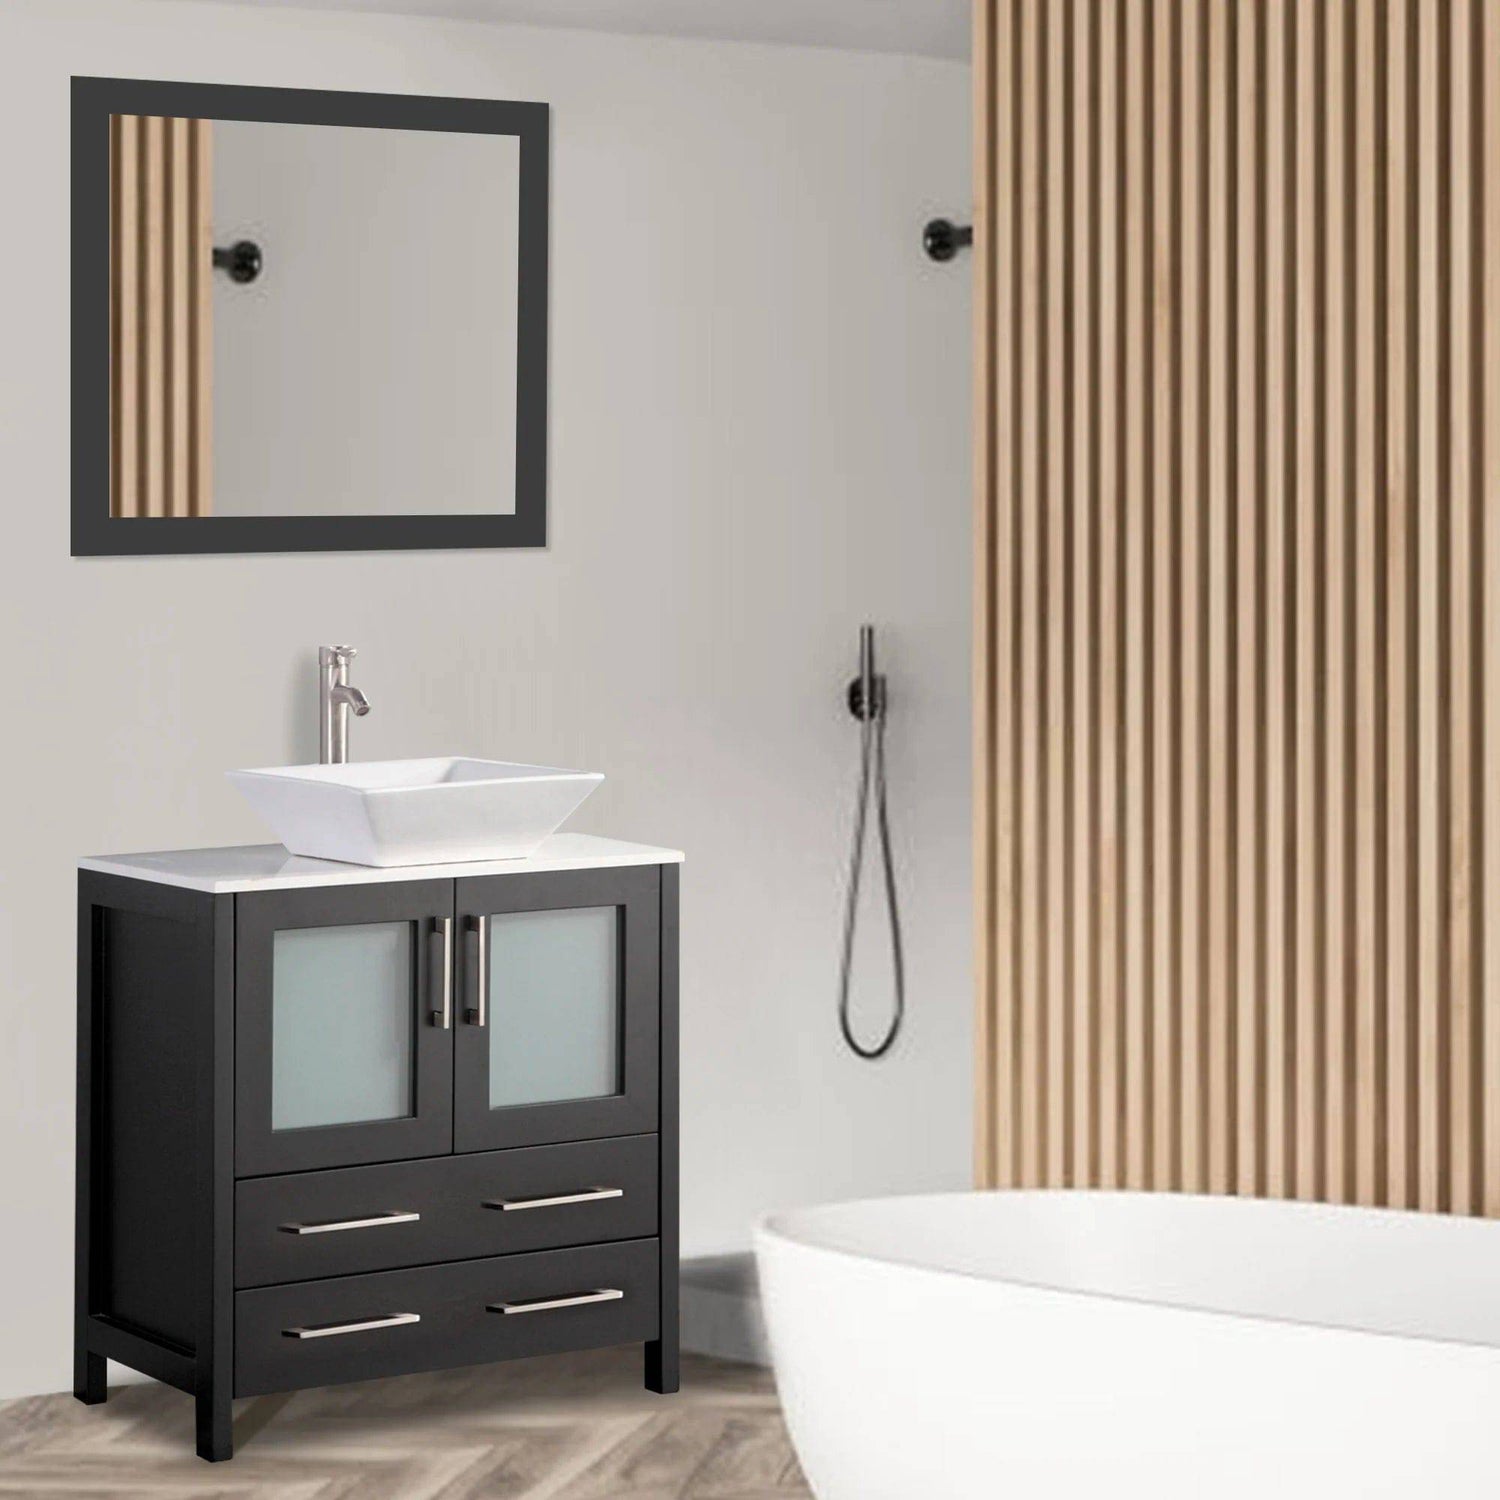 30 in. Single Sink Small Bathroom Vanity Set in Espresso - Decohub Home